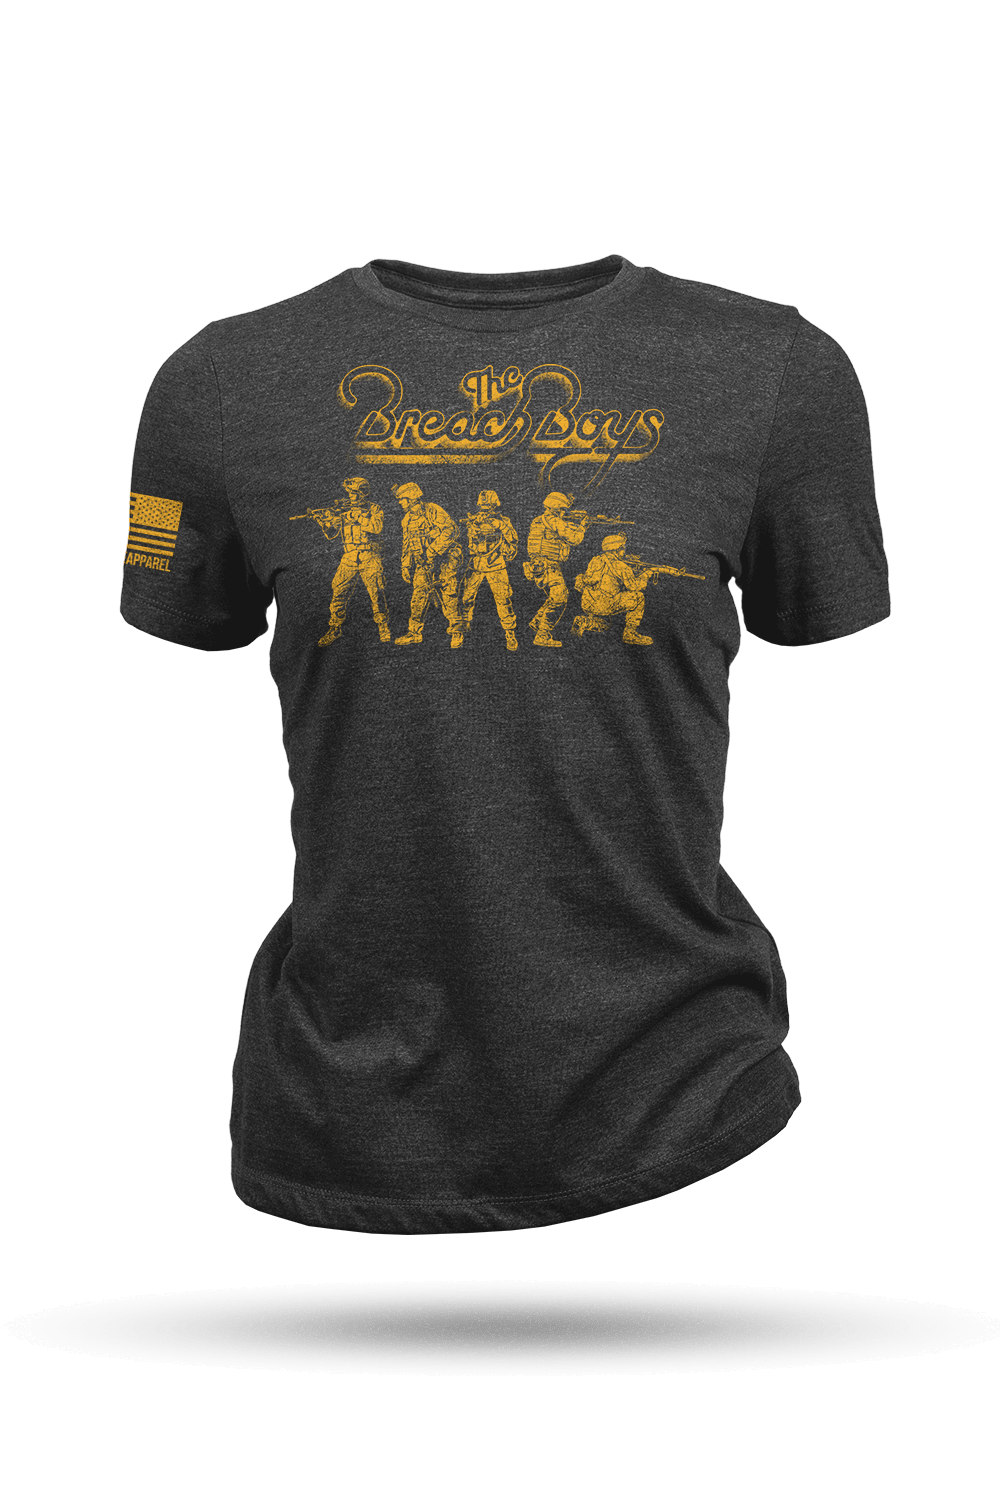 Women's T-Shirt - The Breach Boys